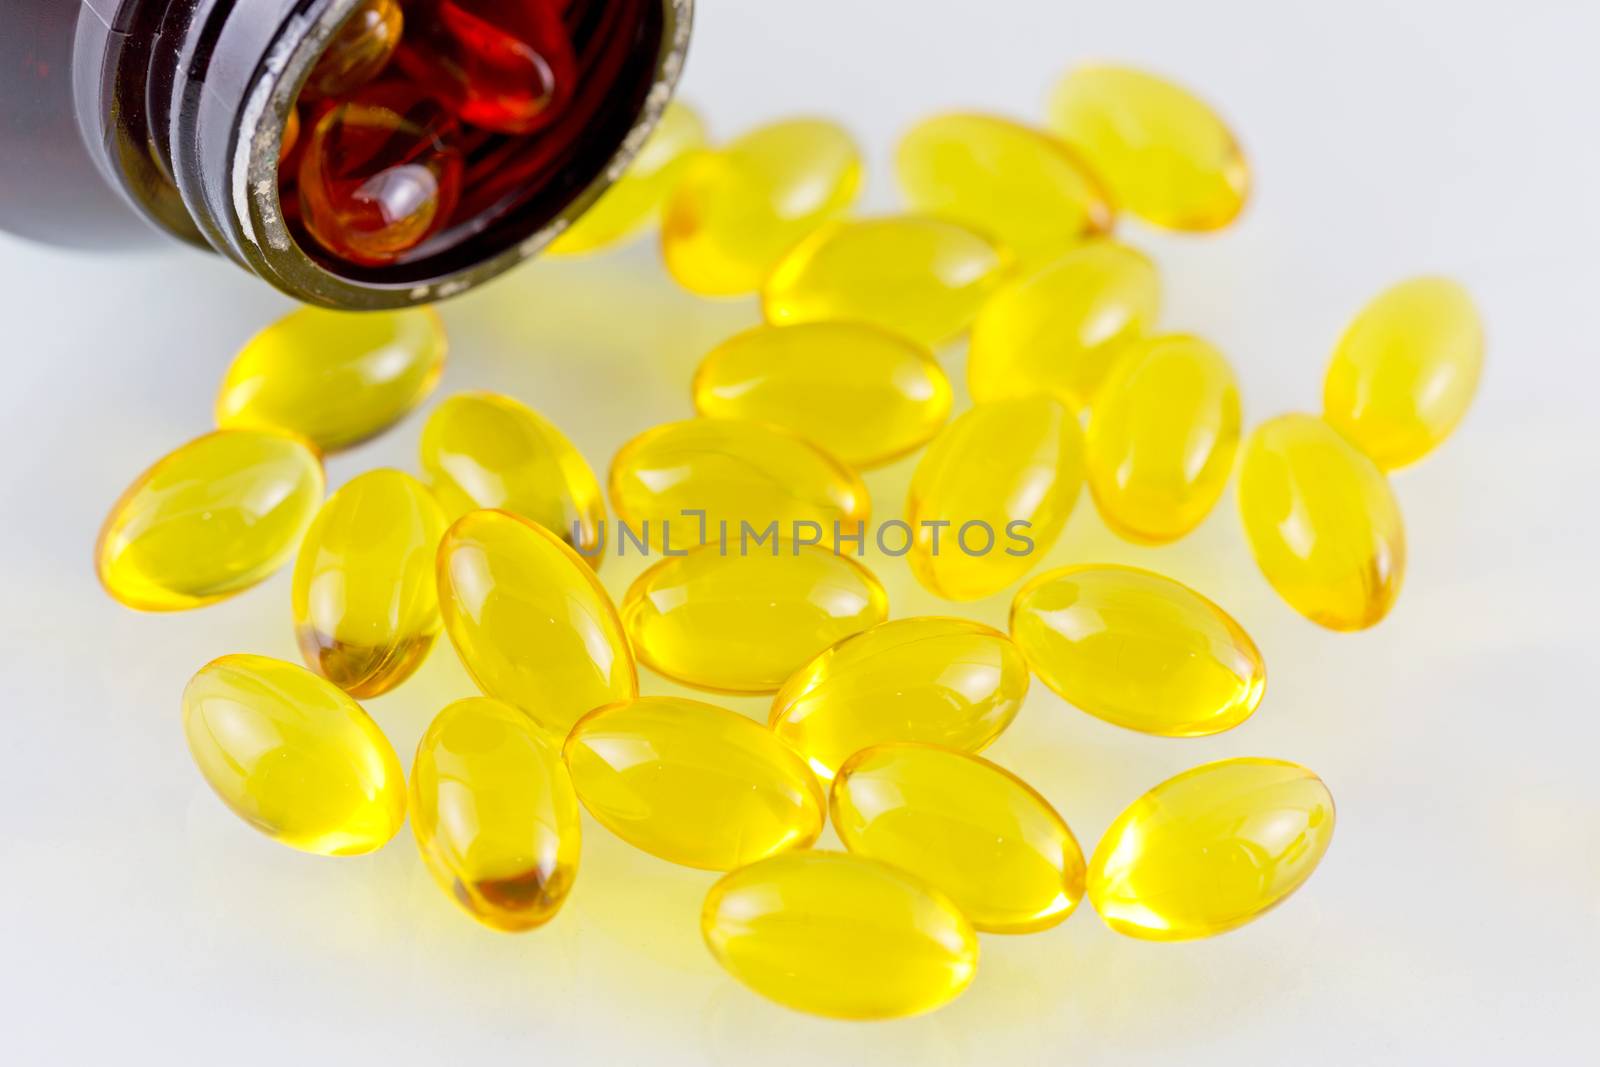 Oil vitamins gel capsules omega 3. by jayzynism